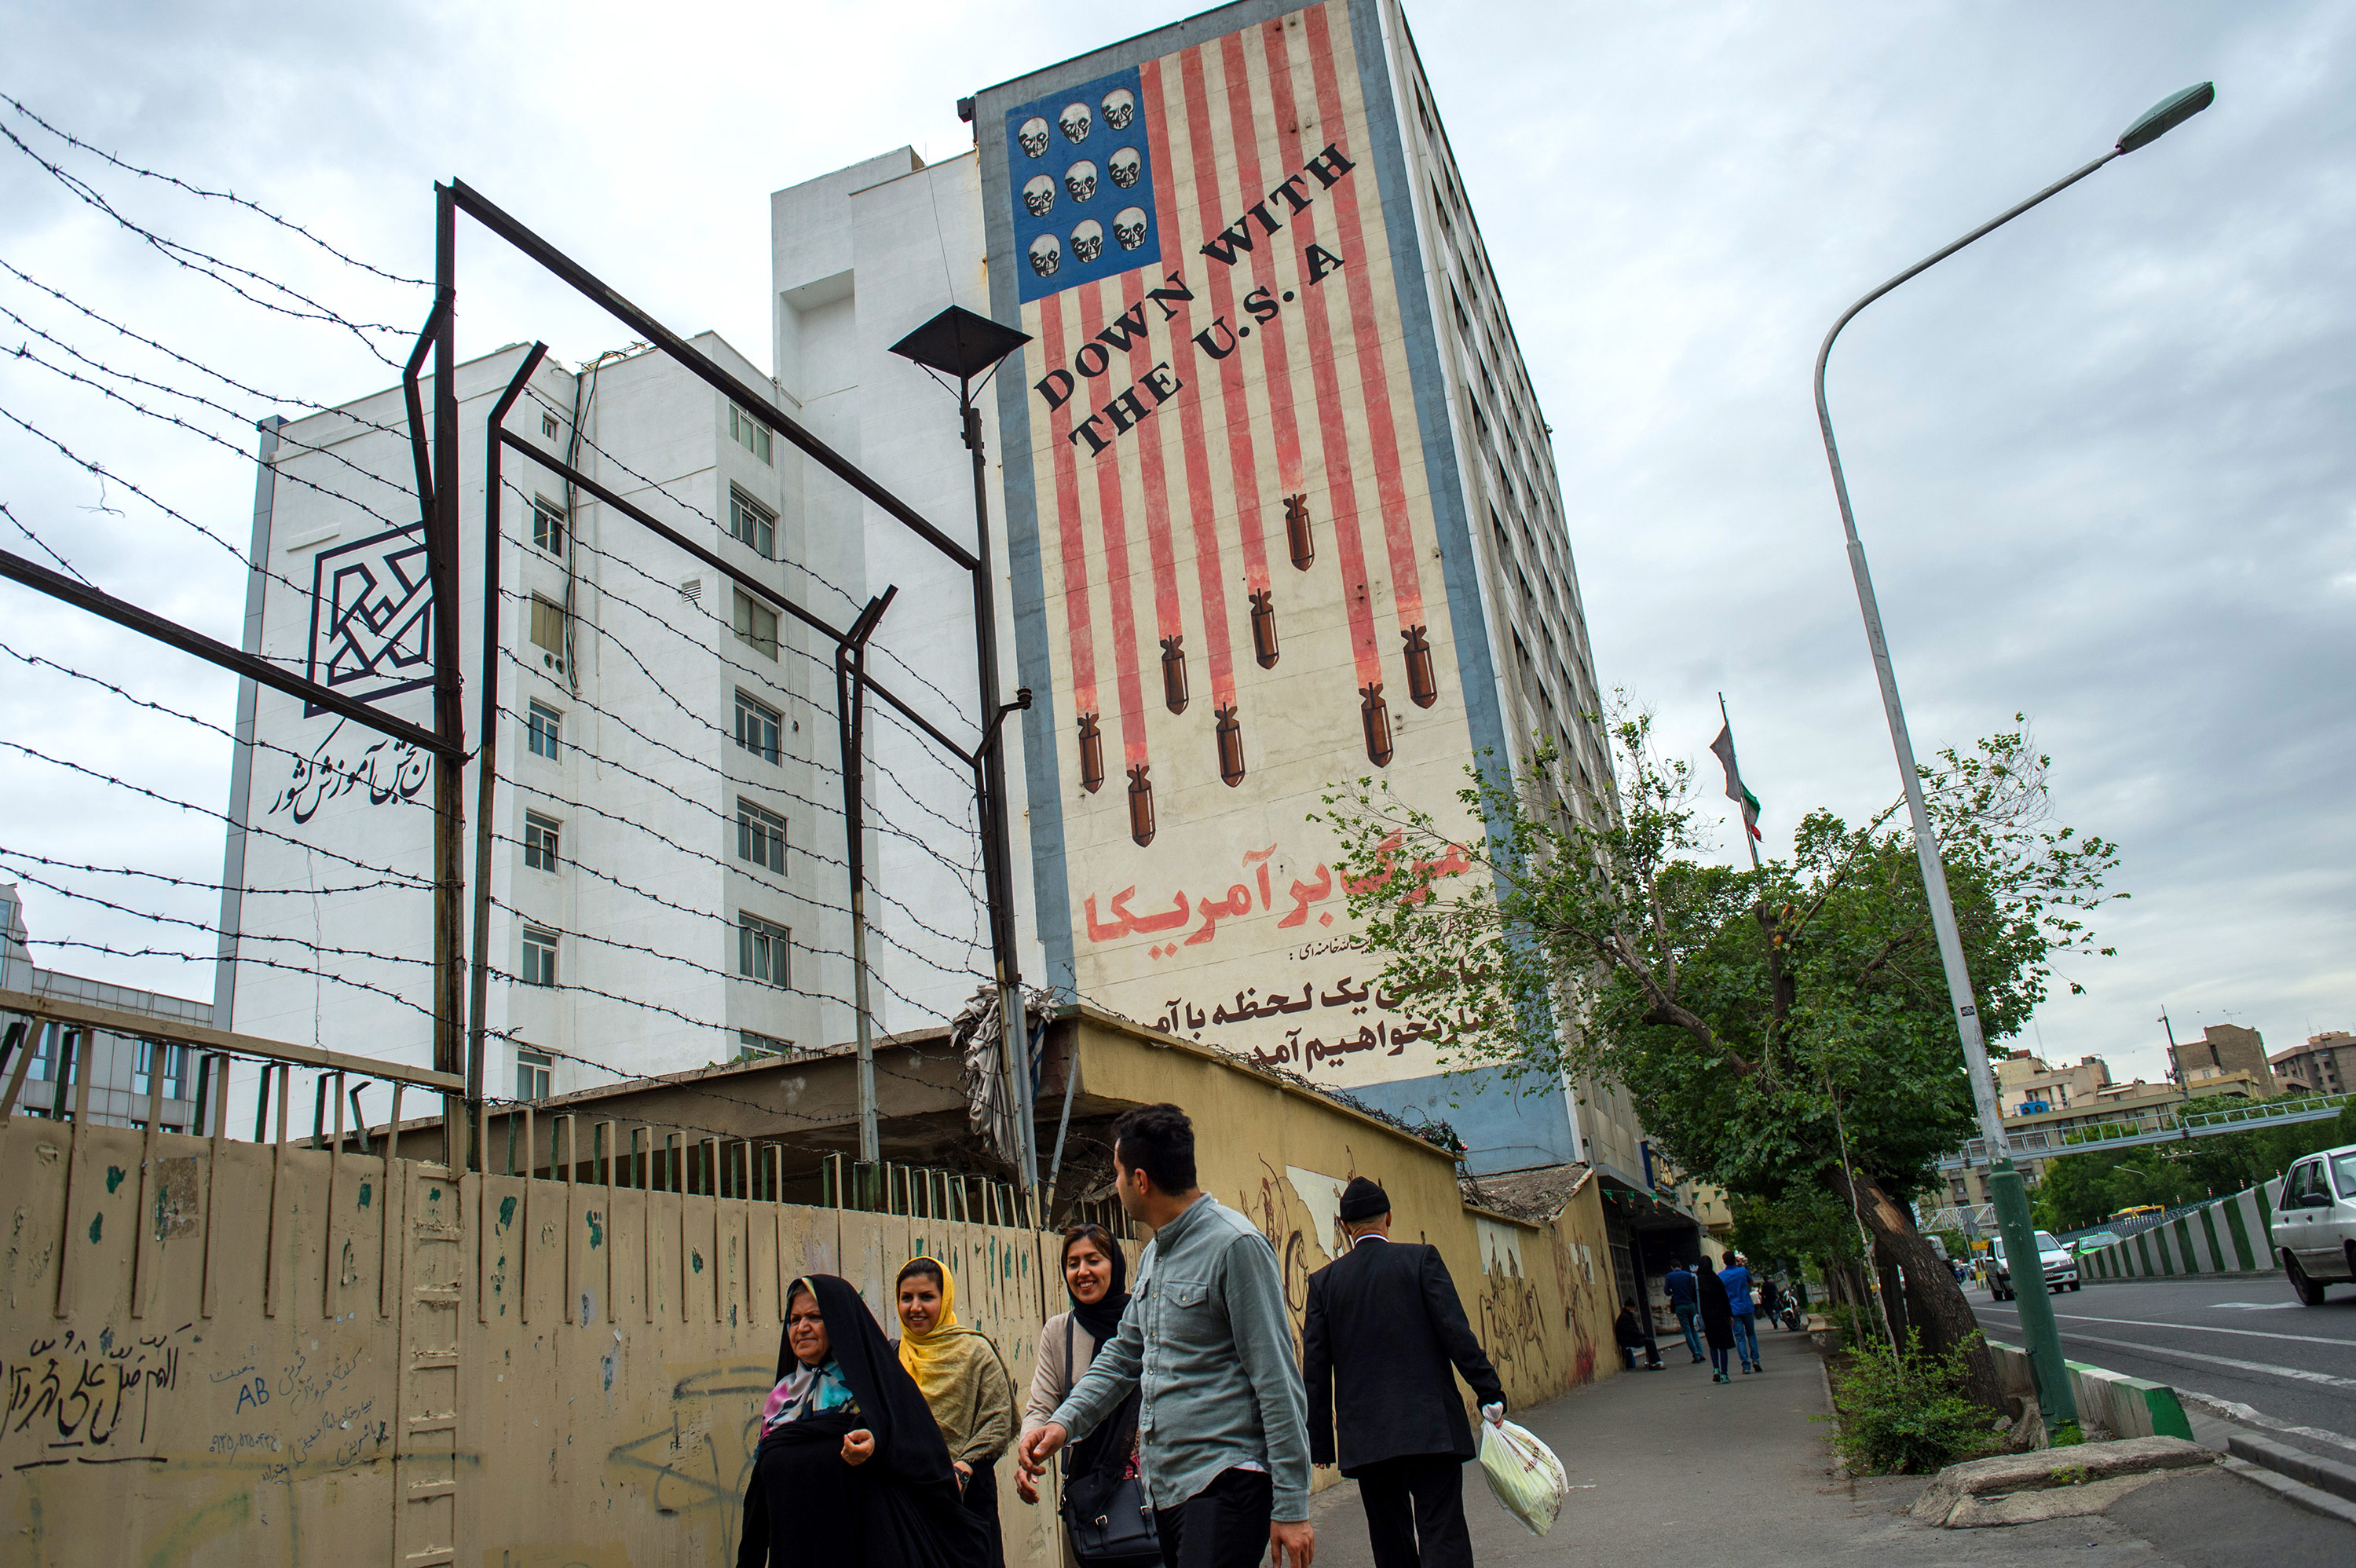 Pedestrians pass a mural on a street in Tehran.